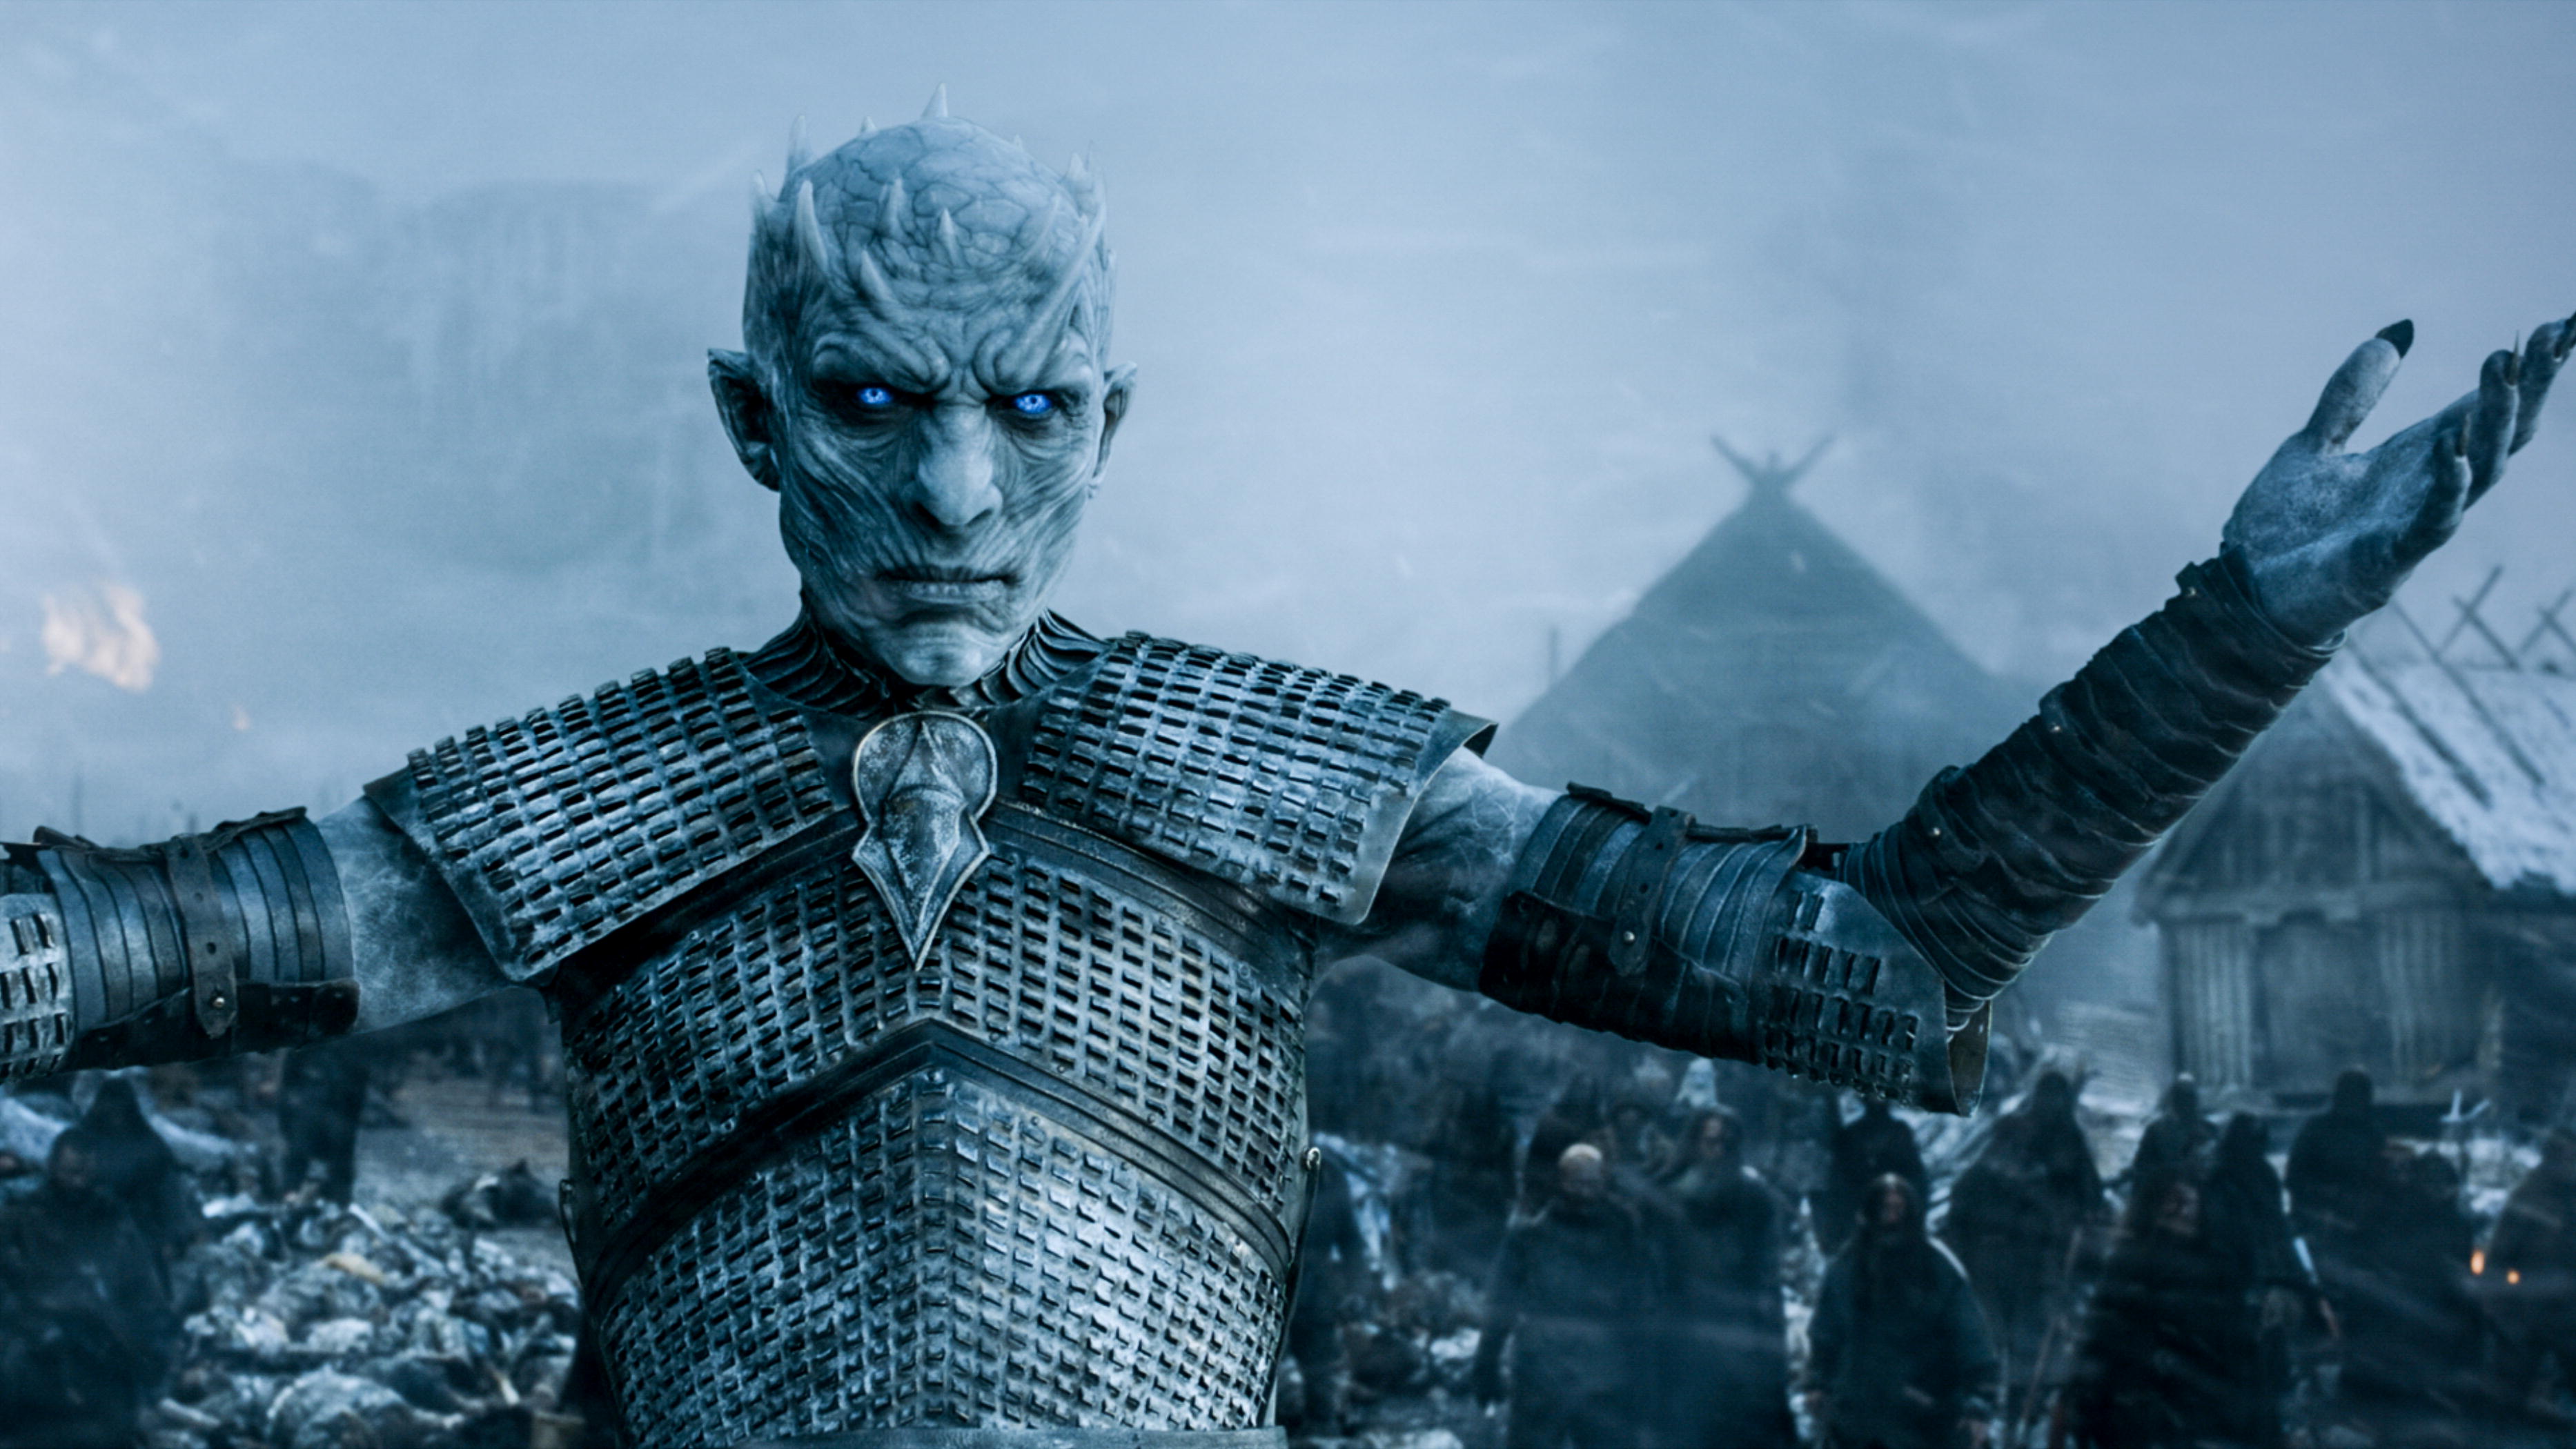 Le spin-off annulé de Game of Thrones a coûté 30 millions de dollars